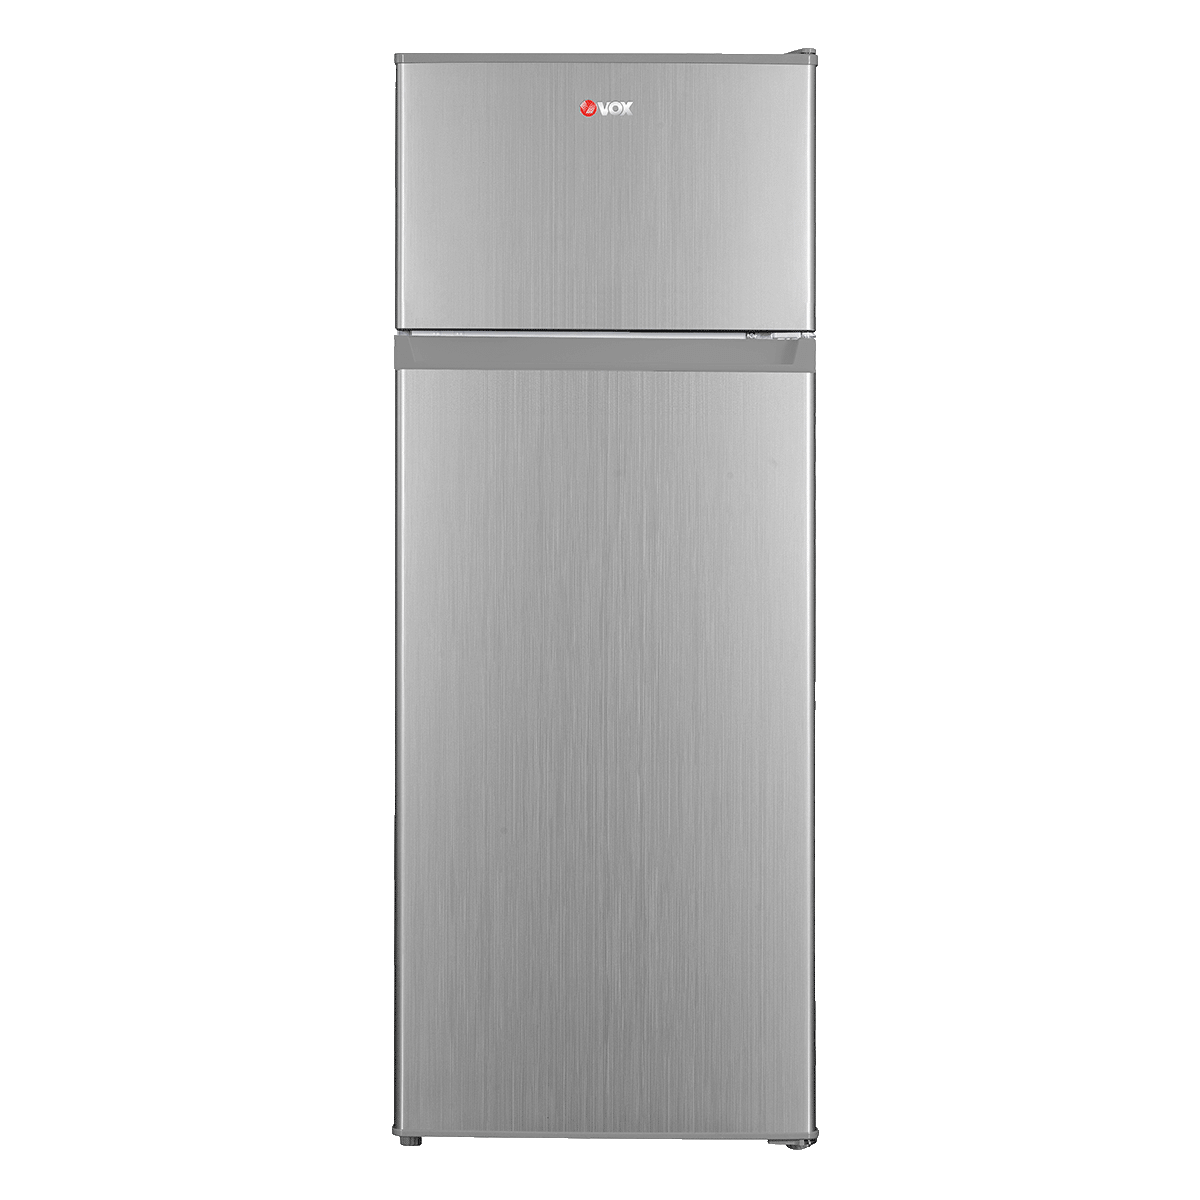 Refrigerator KG 2710 SF 